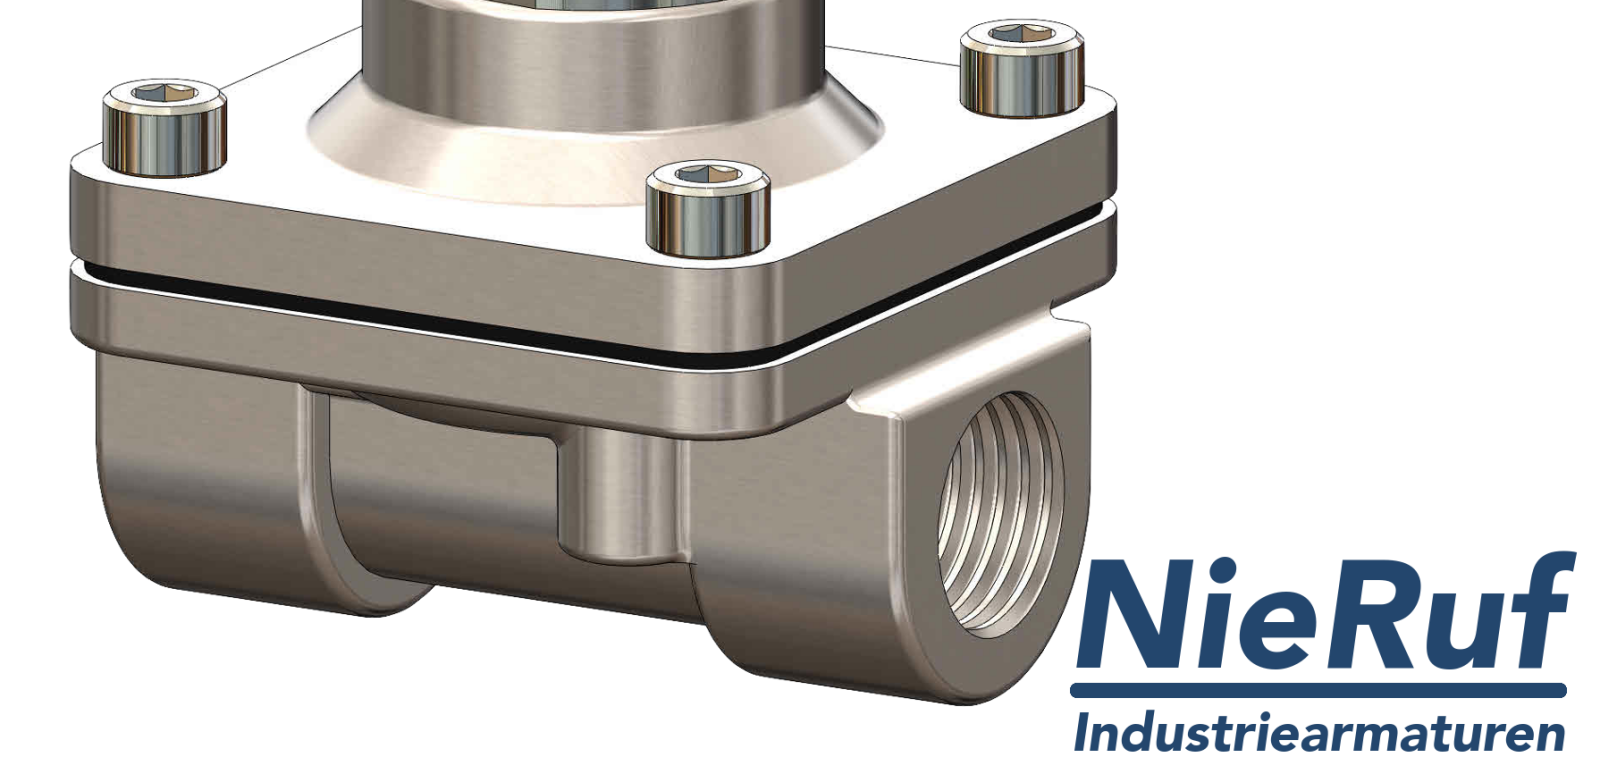 Solenoid valve DN16 G 1/2" Inch FKM 110V stainless steel 1.4308